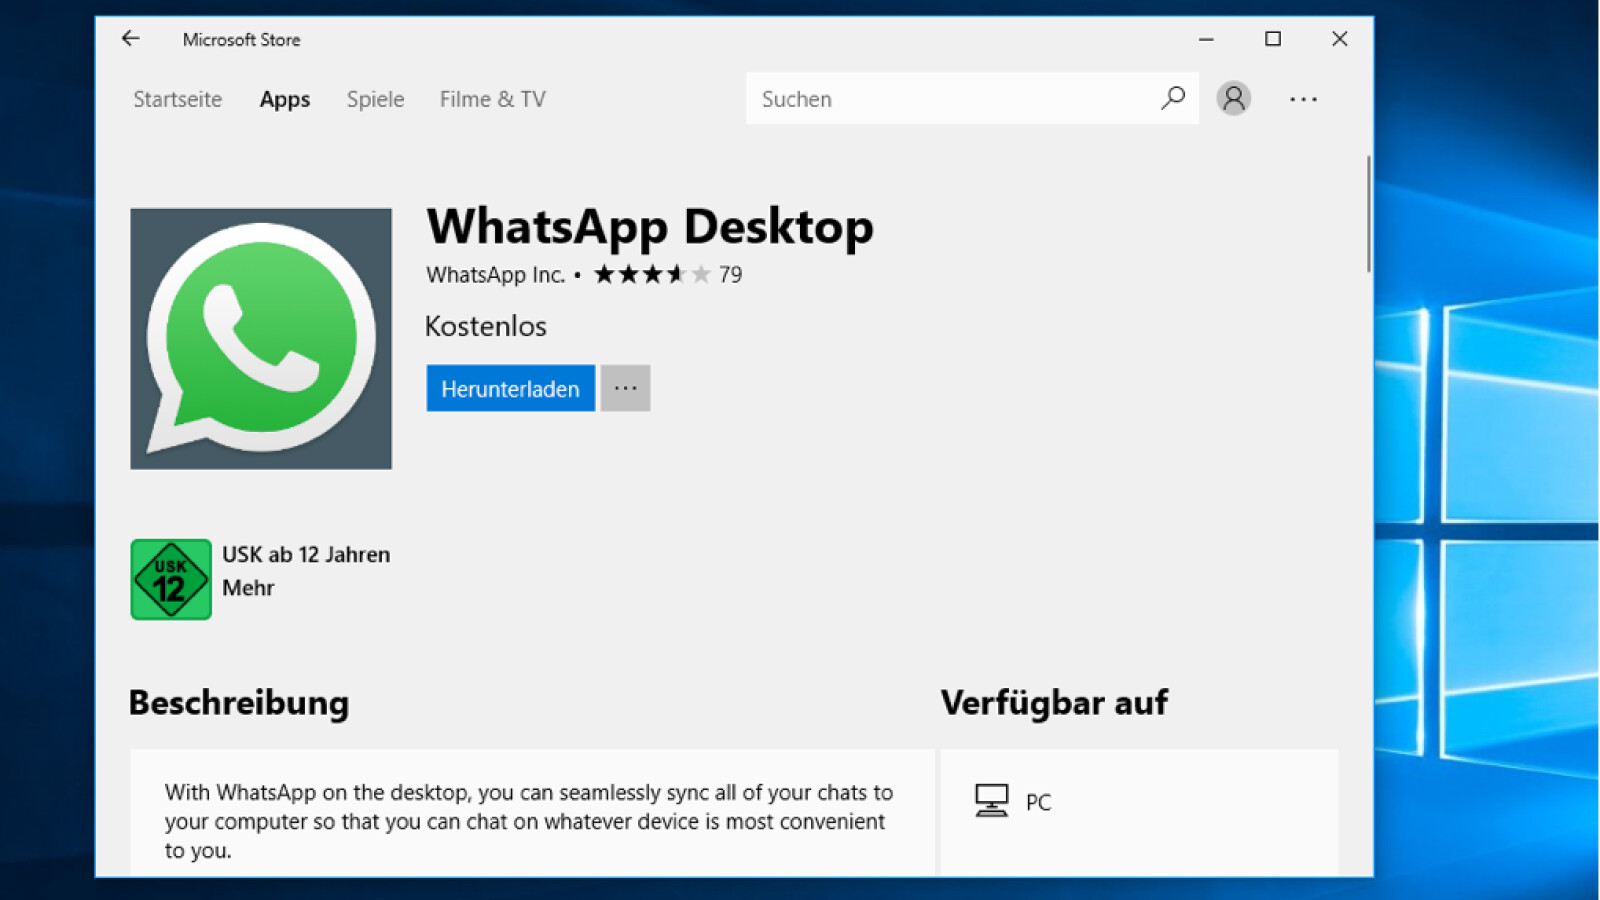 whatsapp desktop windows 7 64 bit download